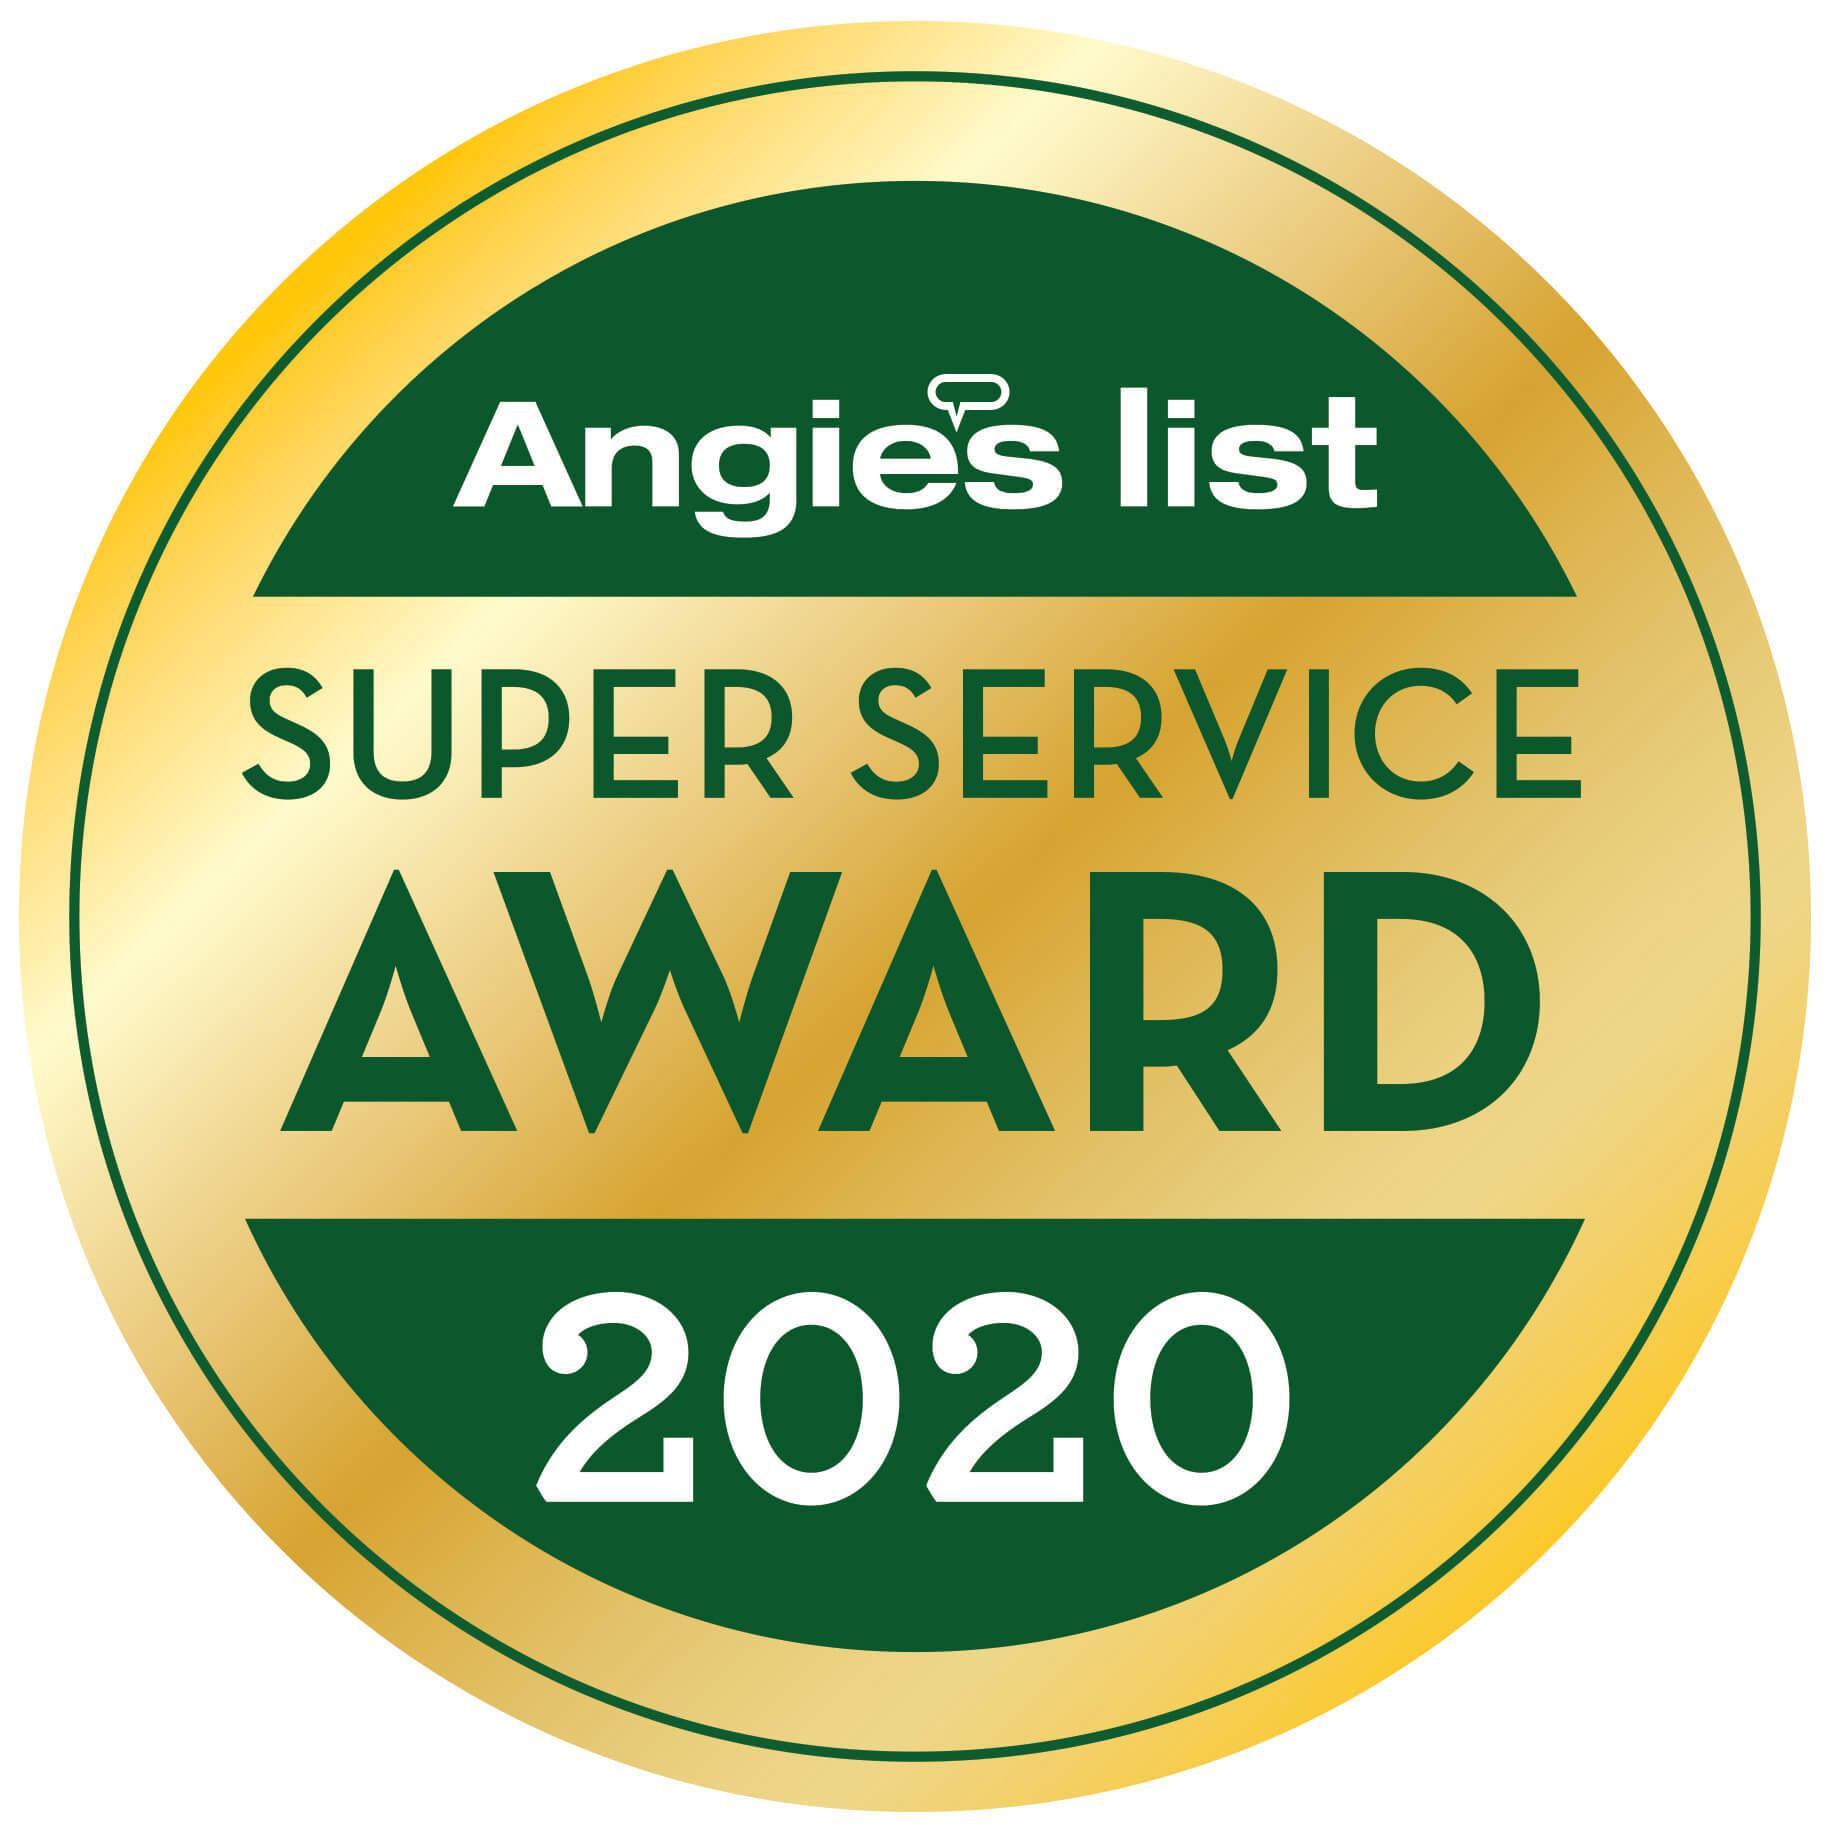 angies-list-super-service-award-winner-in-parma